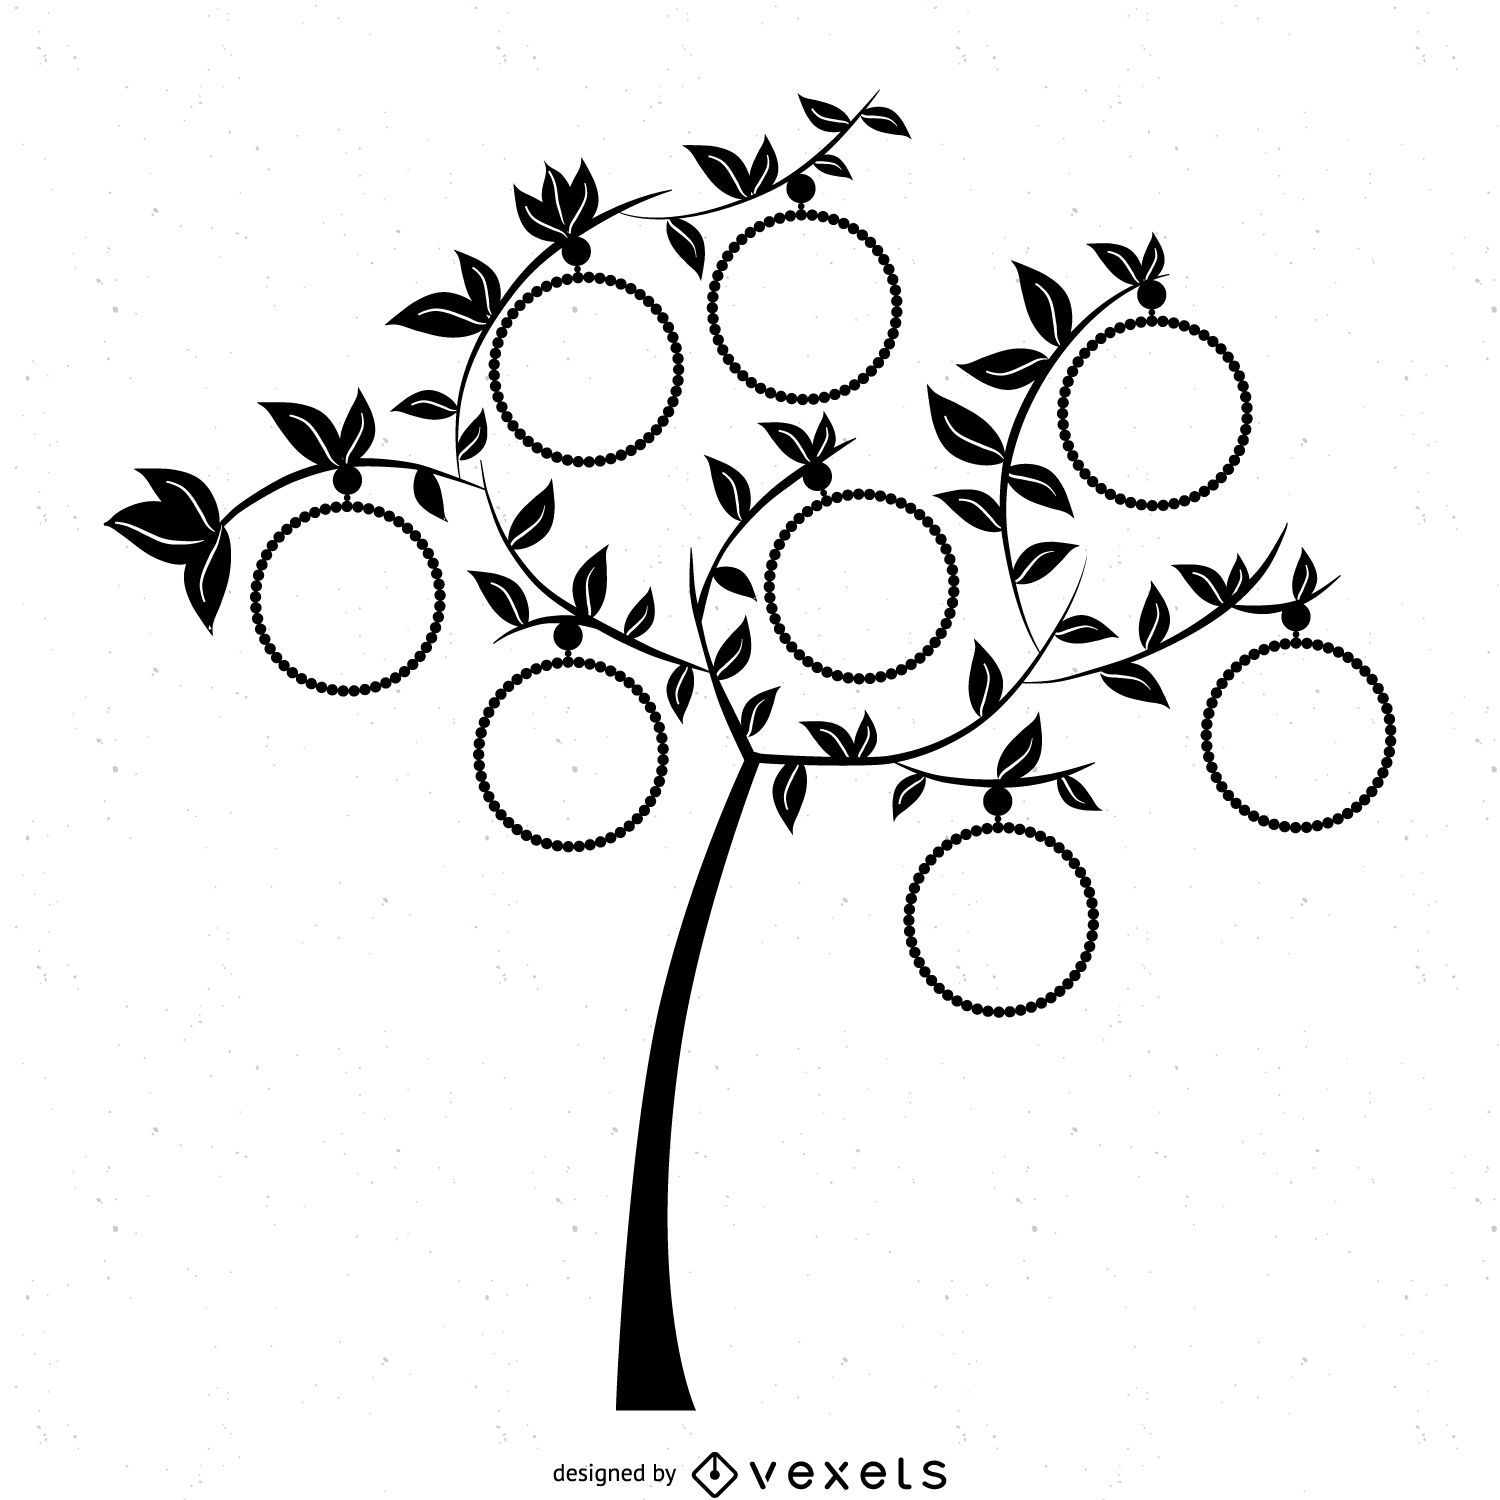 family tree designs templates